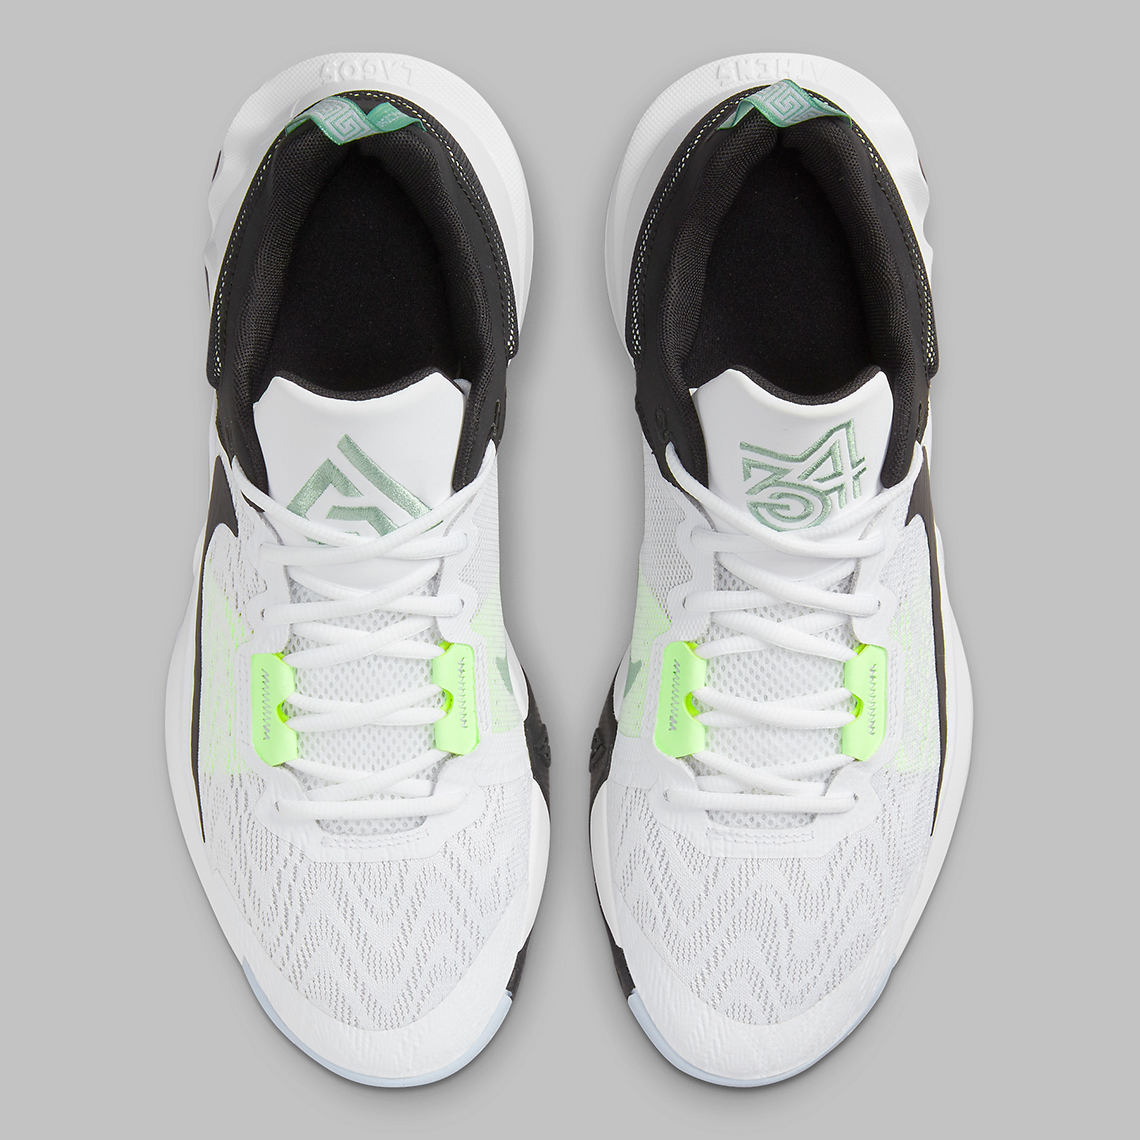 Nike rory custom nike lunar 3 shoes women running shoes White Black Barely Volt Grey Fog 1